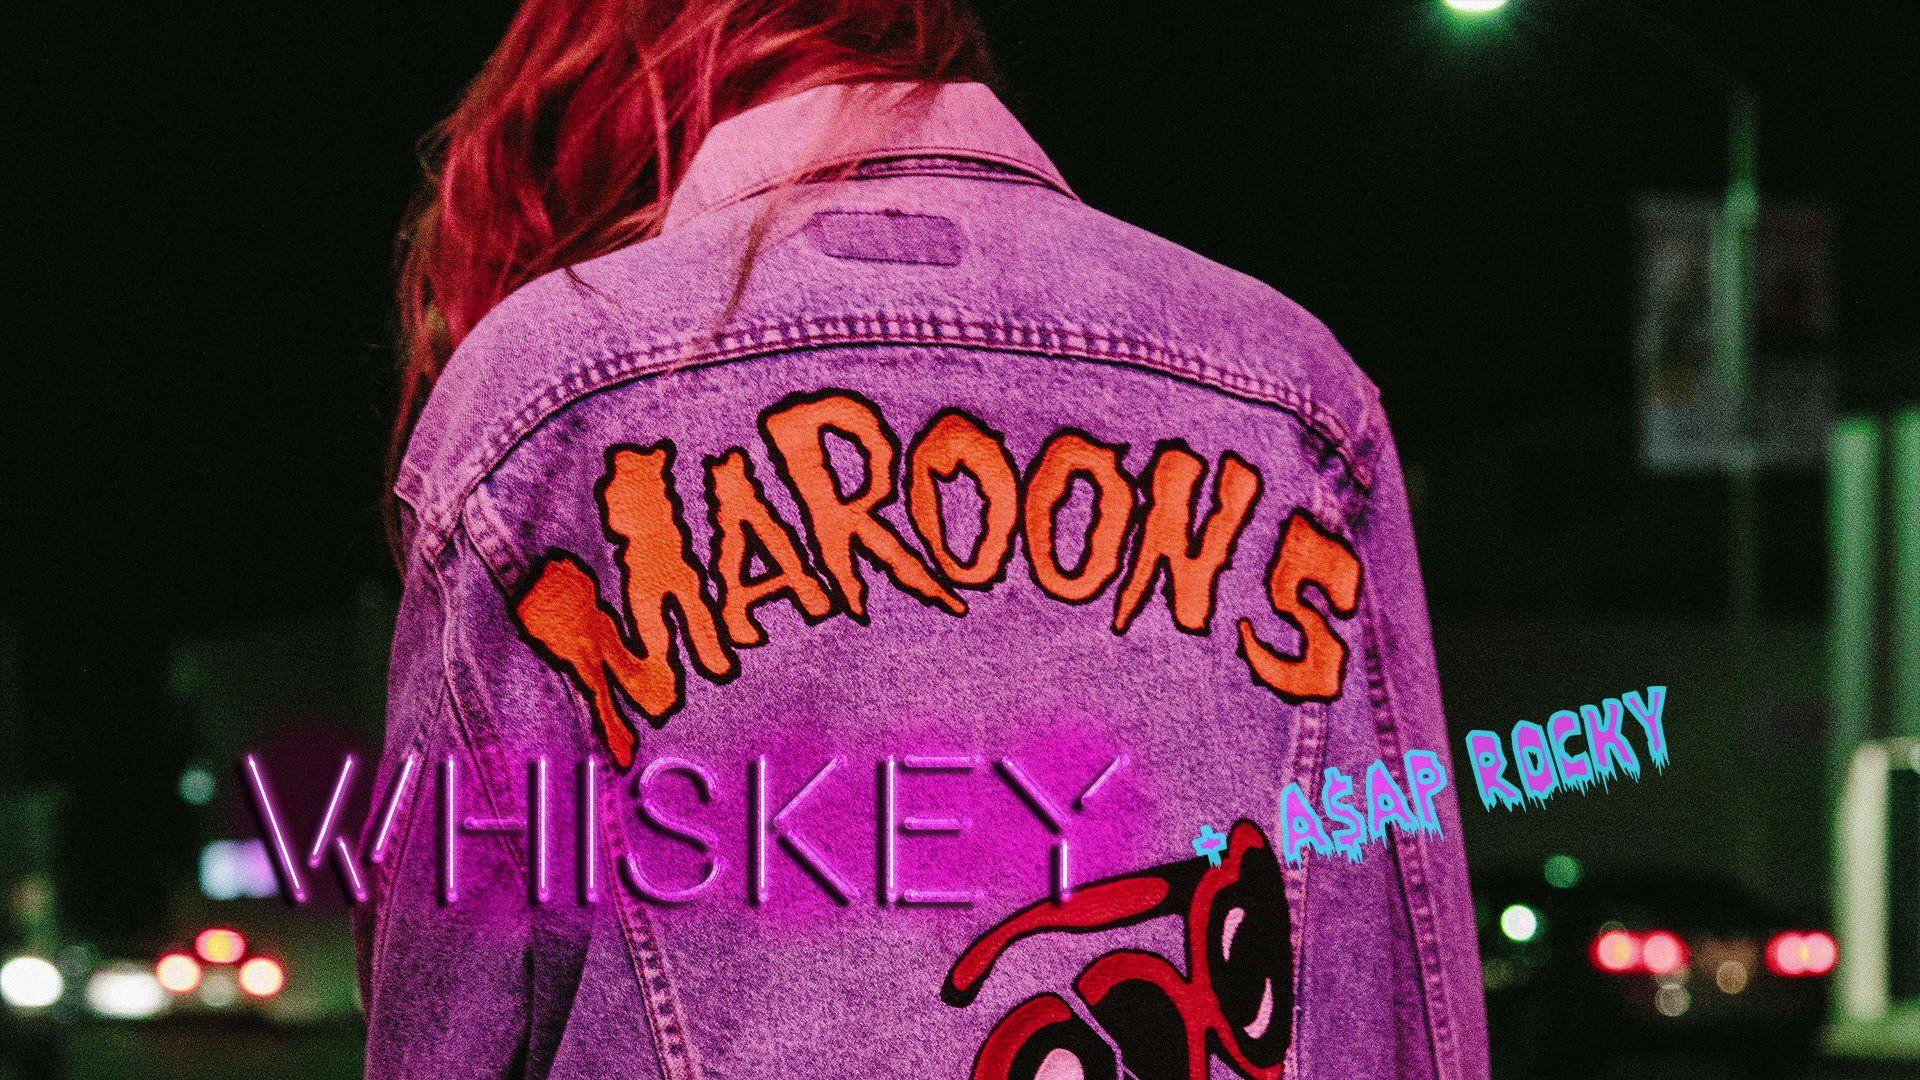 Red Maroon 5 Logo - Maroon 5 - Whiskey ft. A$AP Rocky - YouTube